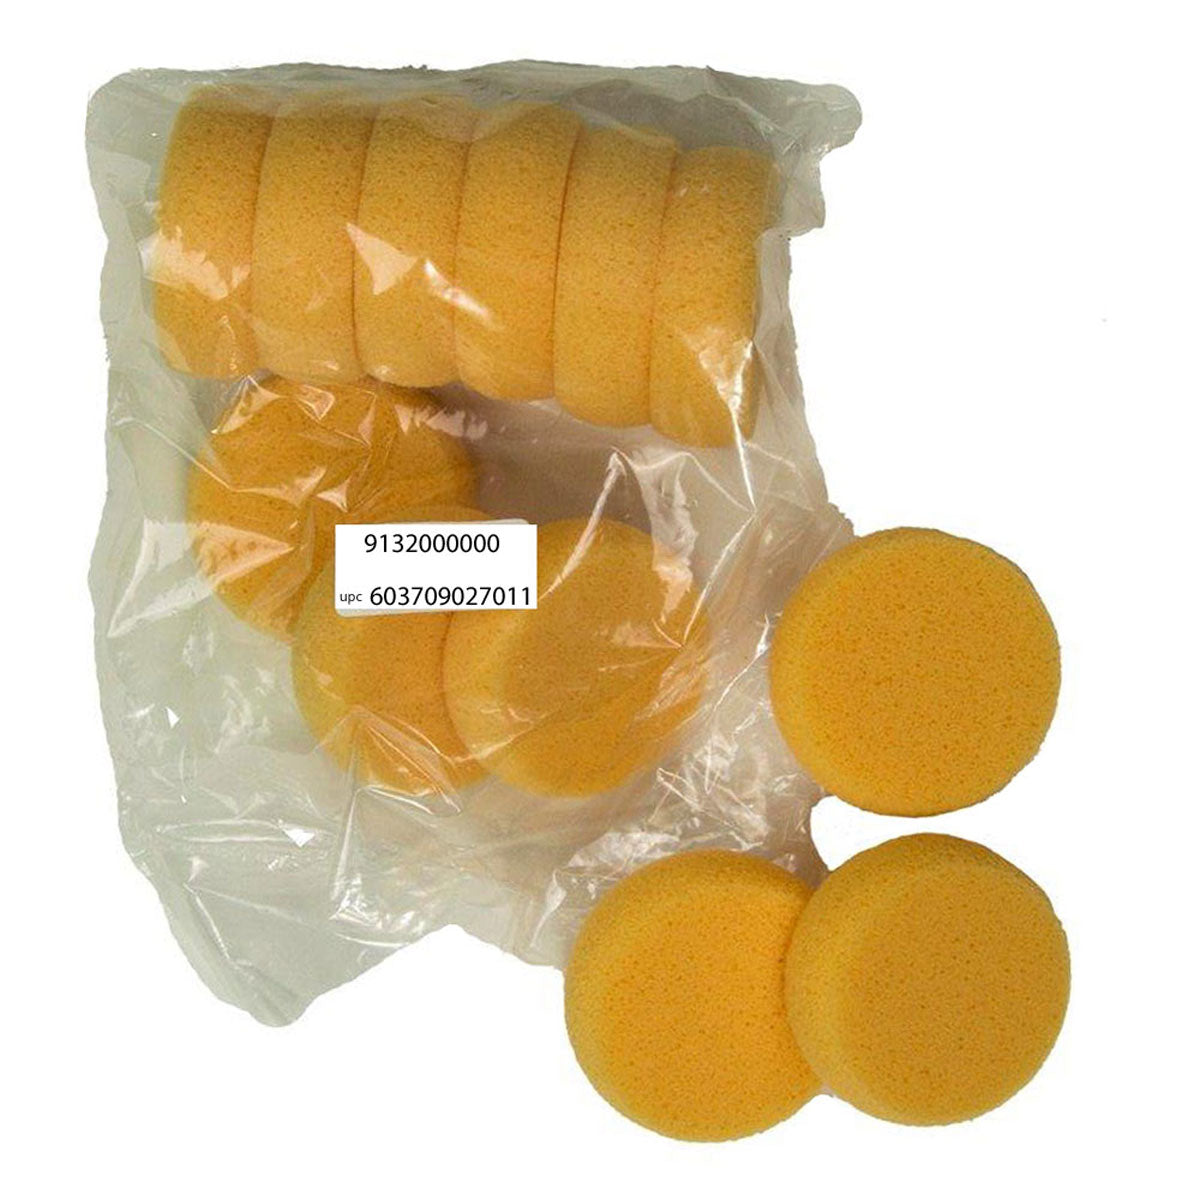 Tack Sponge 12 Pack- Tack Cleaning Sponges